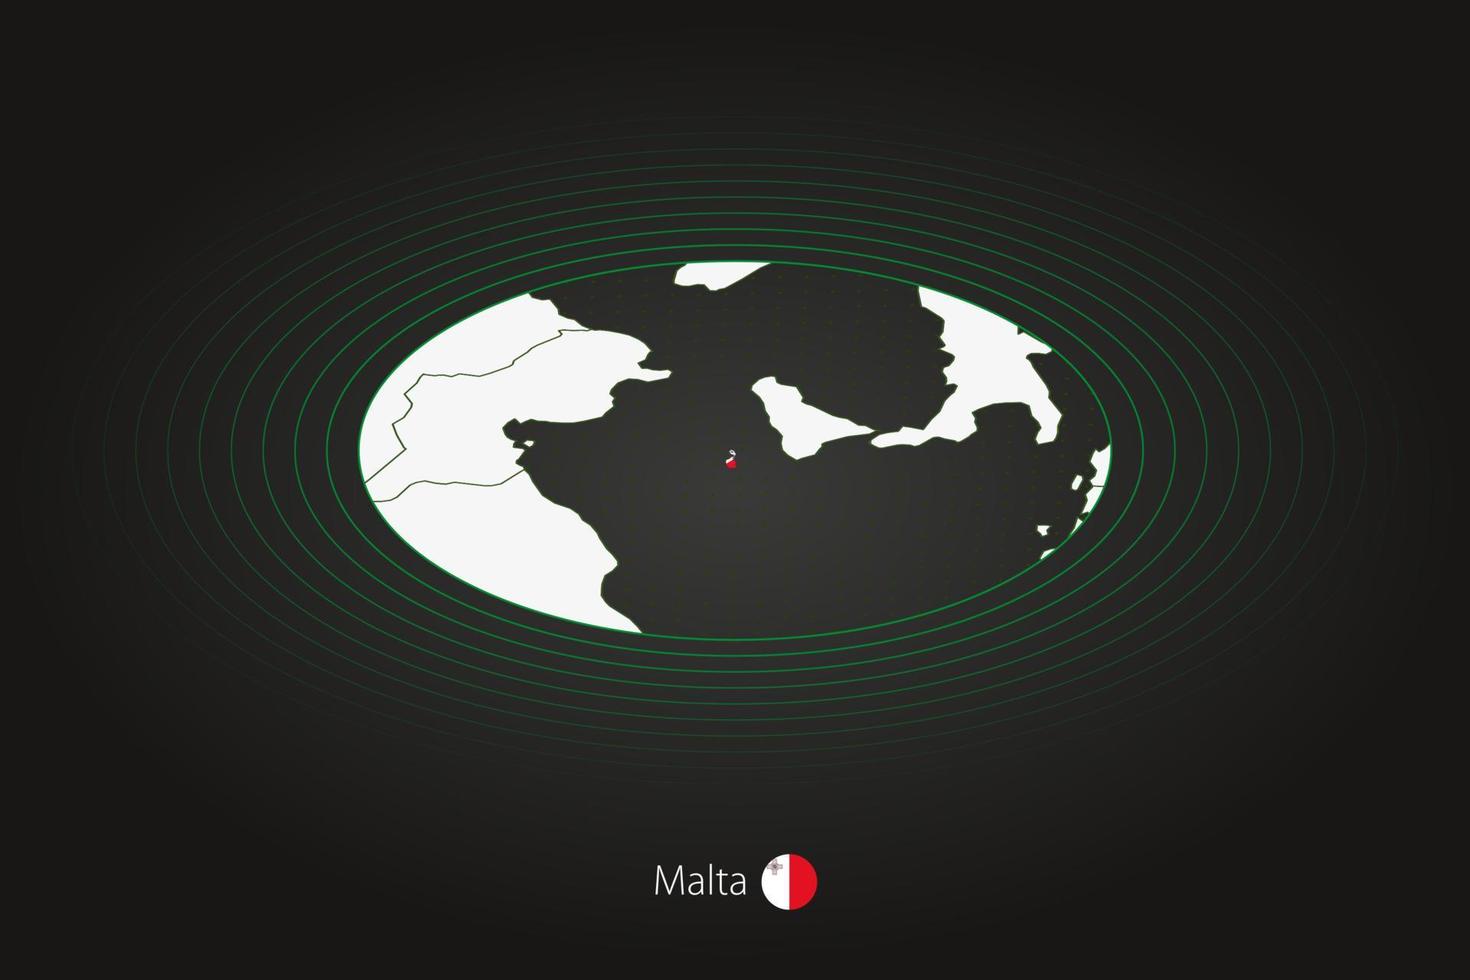 Malta mapa dentro Sombrio cor, oval mapa com vizinho países. vetor